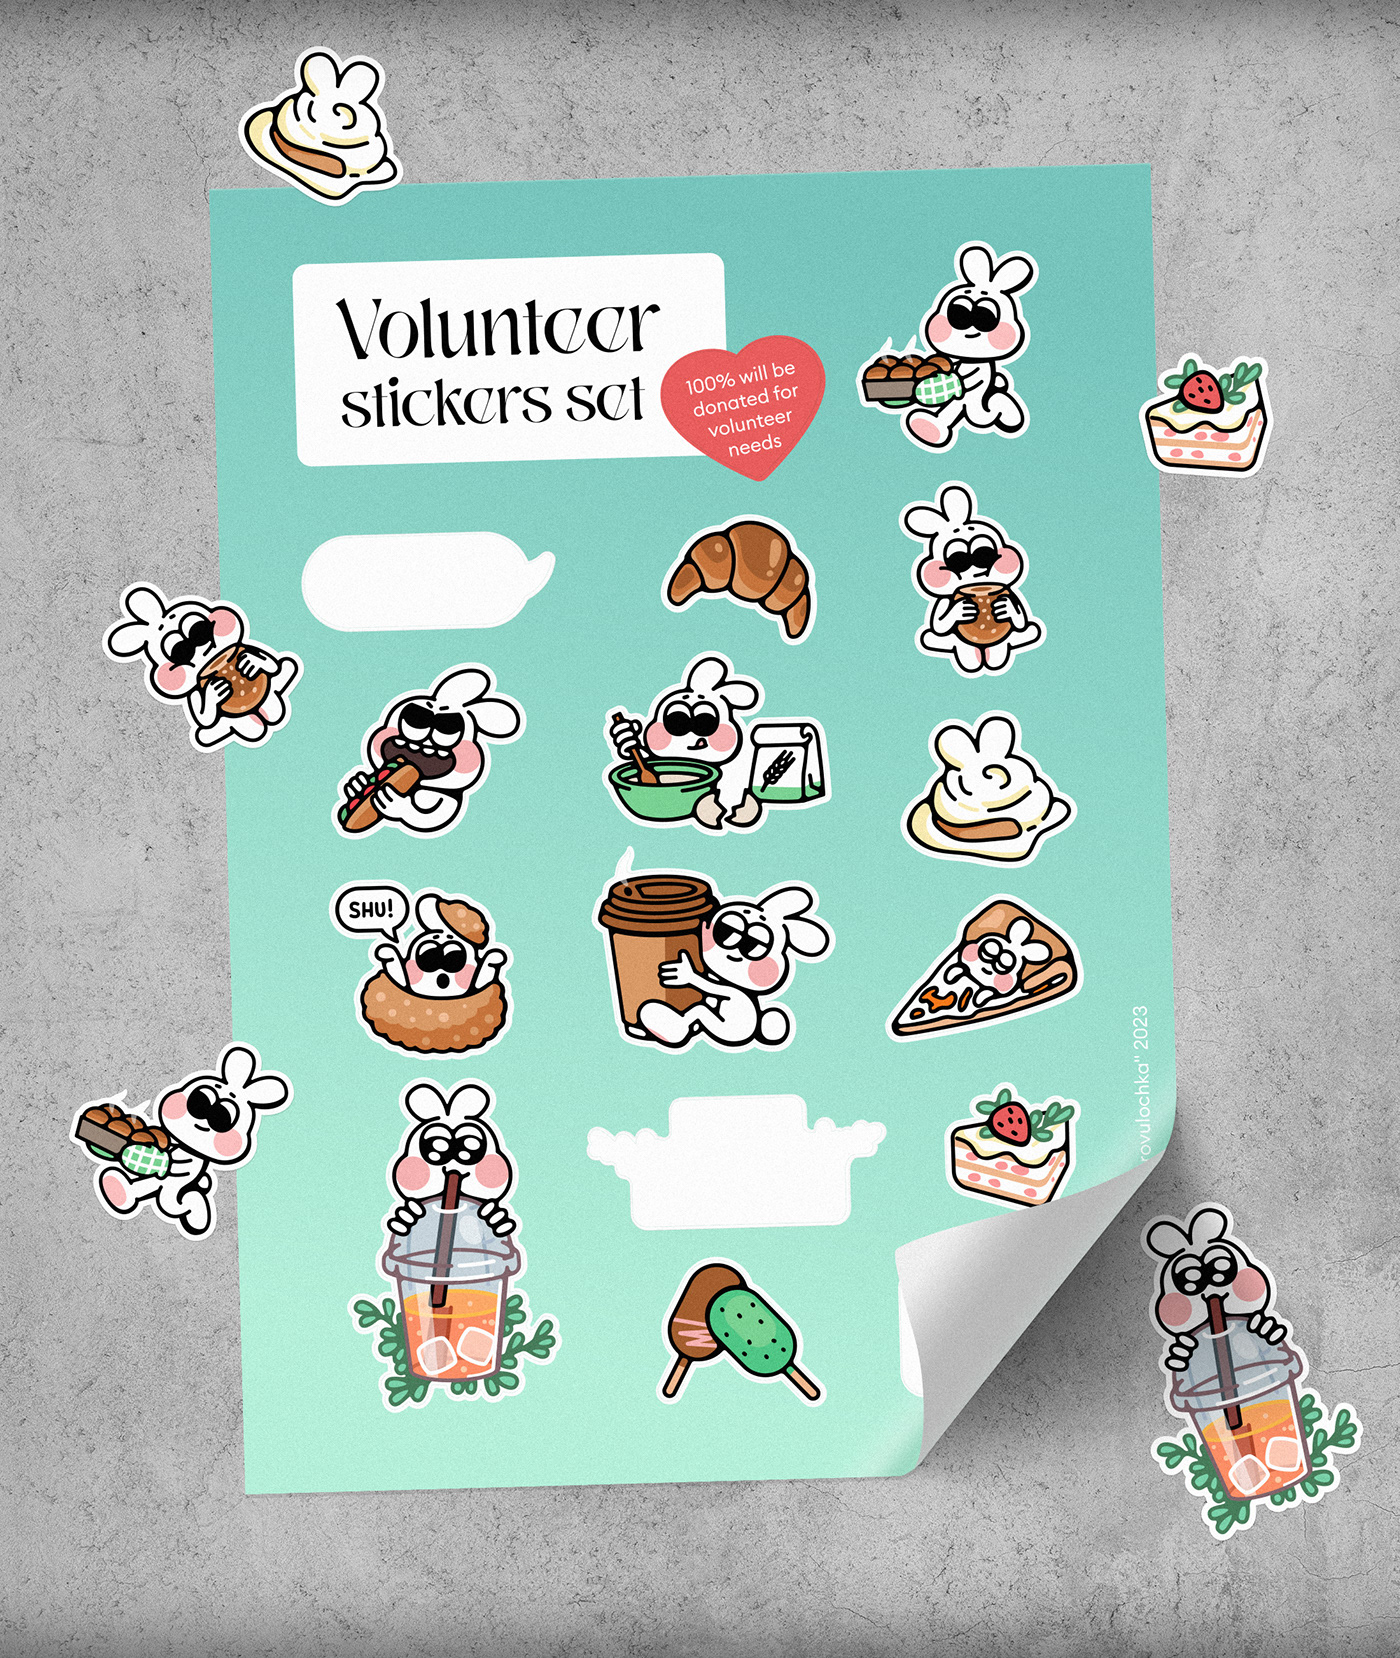 Mascot sticker set bunny baker bakery branding bun Retro vintage rabbit